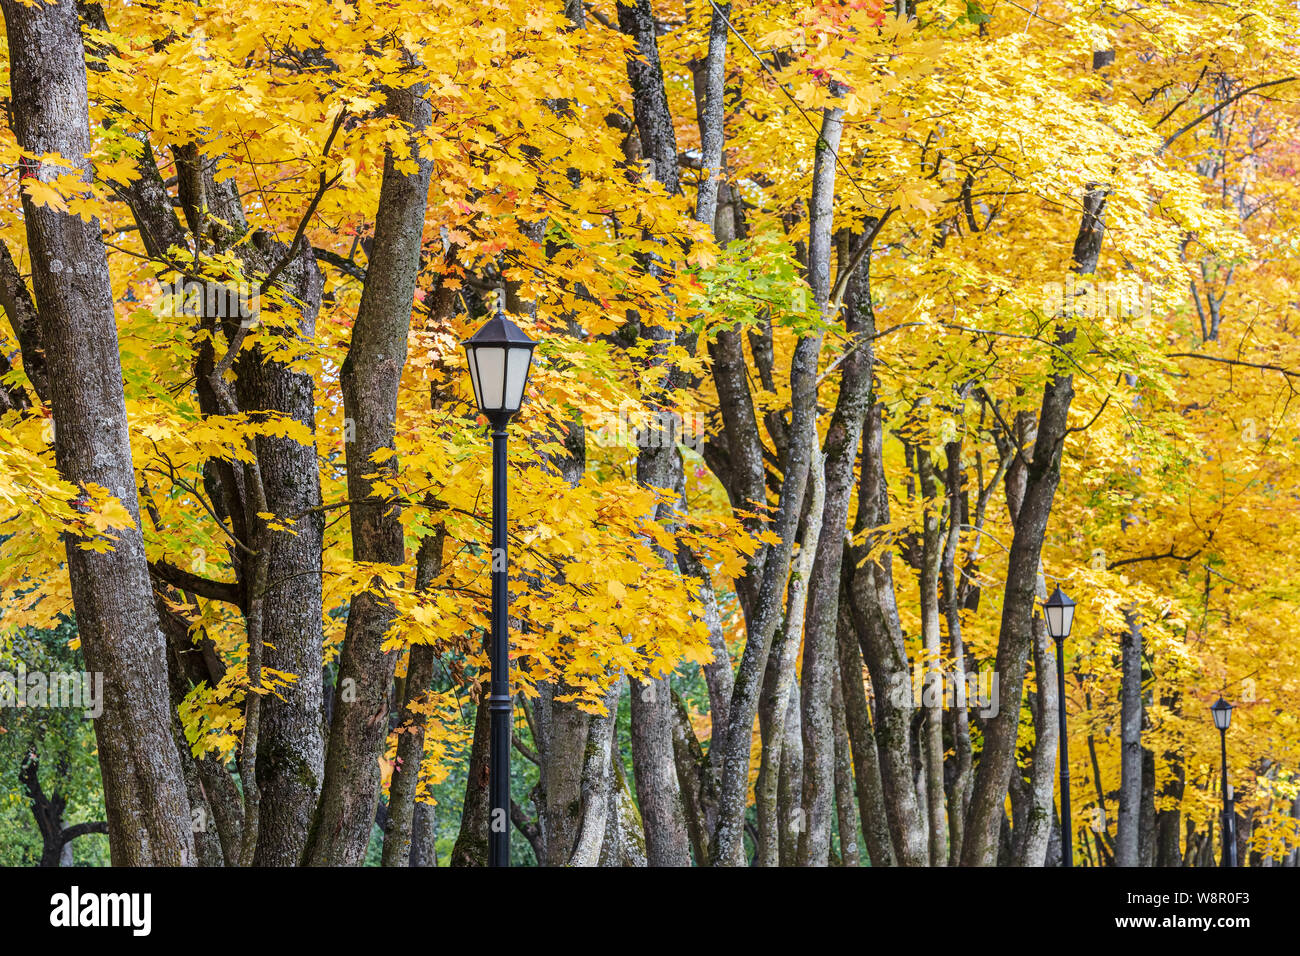 park tree tops with bright gold foliage and black retro lanterns. closeup view Stock Photo